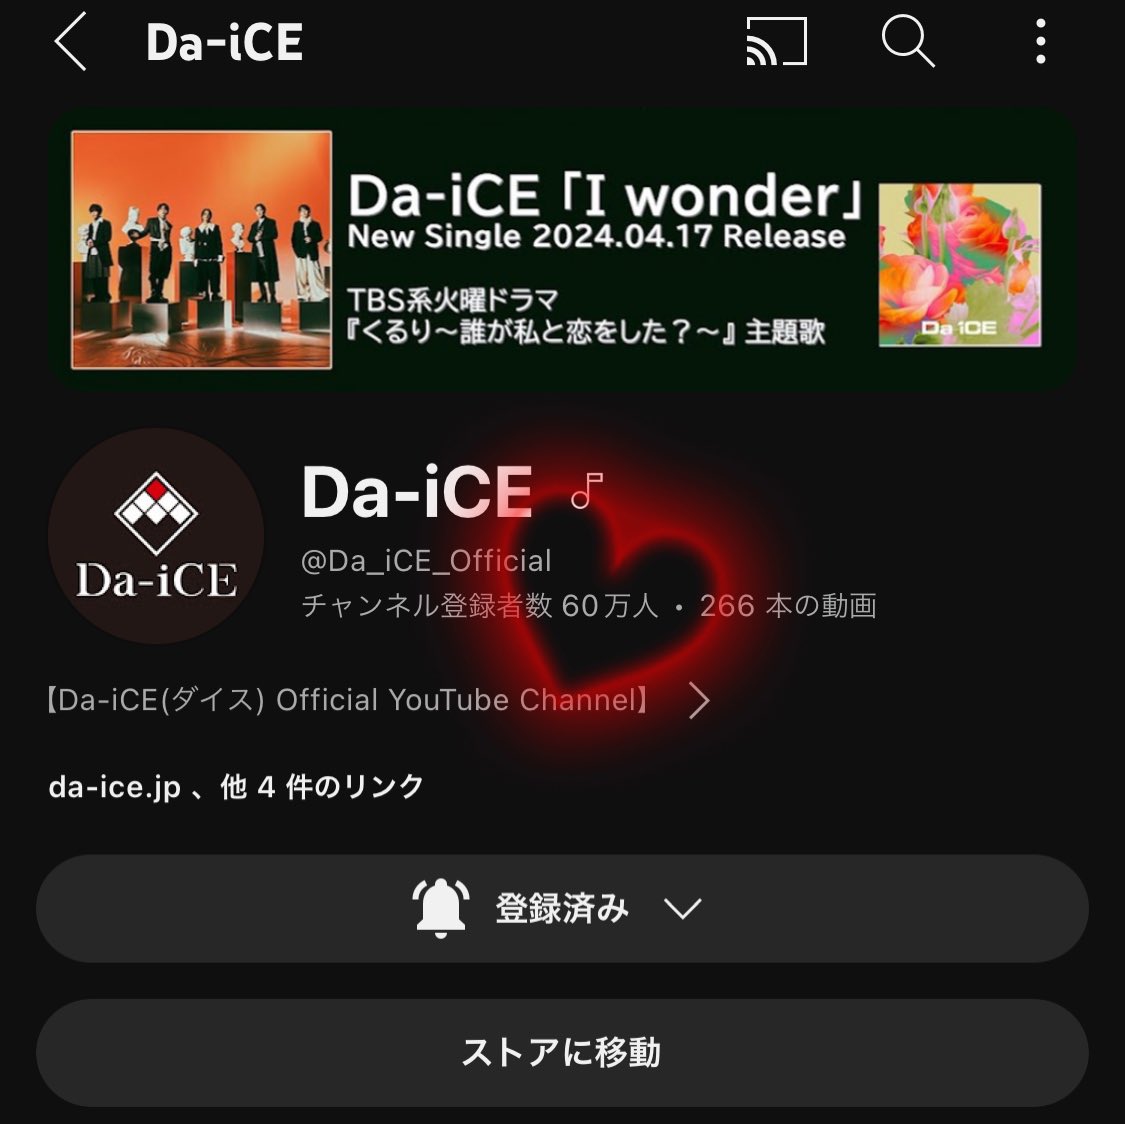 YouTubeチャンネル登録者数 60万人おめでとう㊗️ #Da_iCE